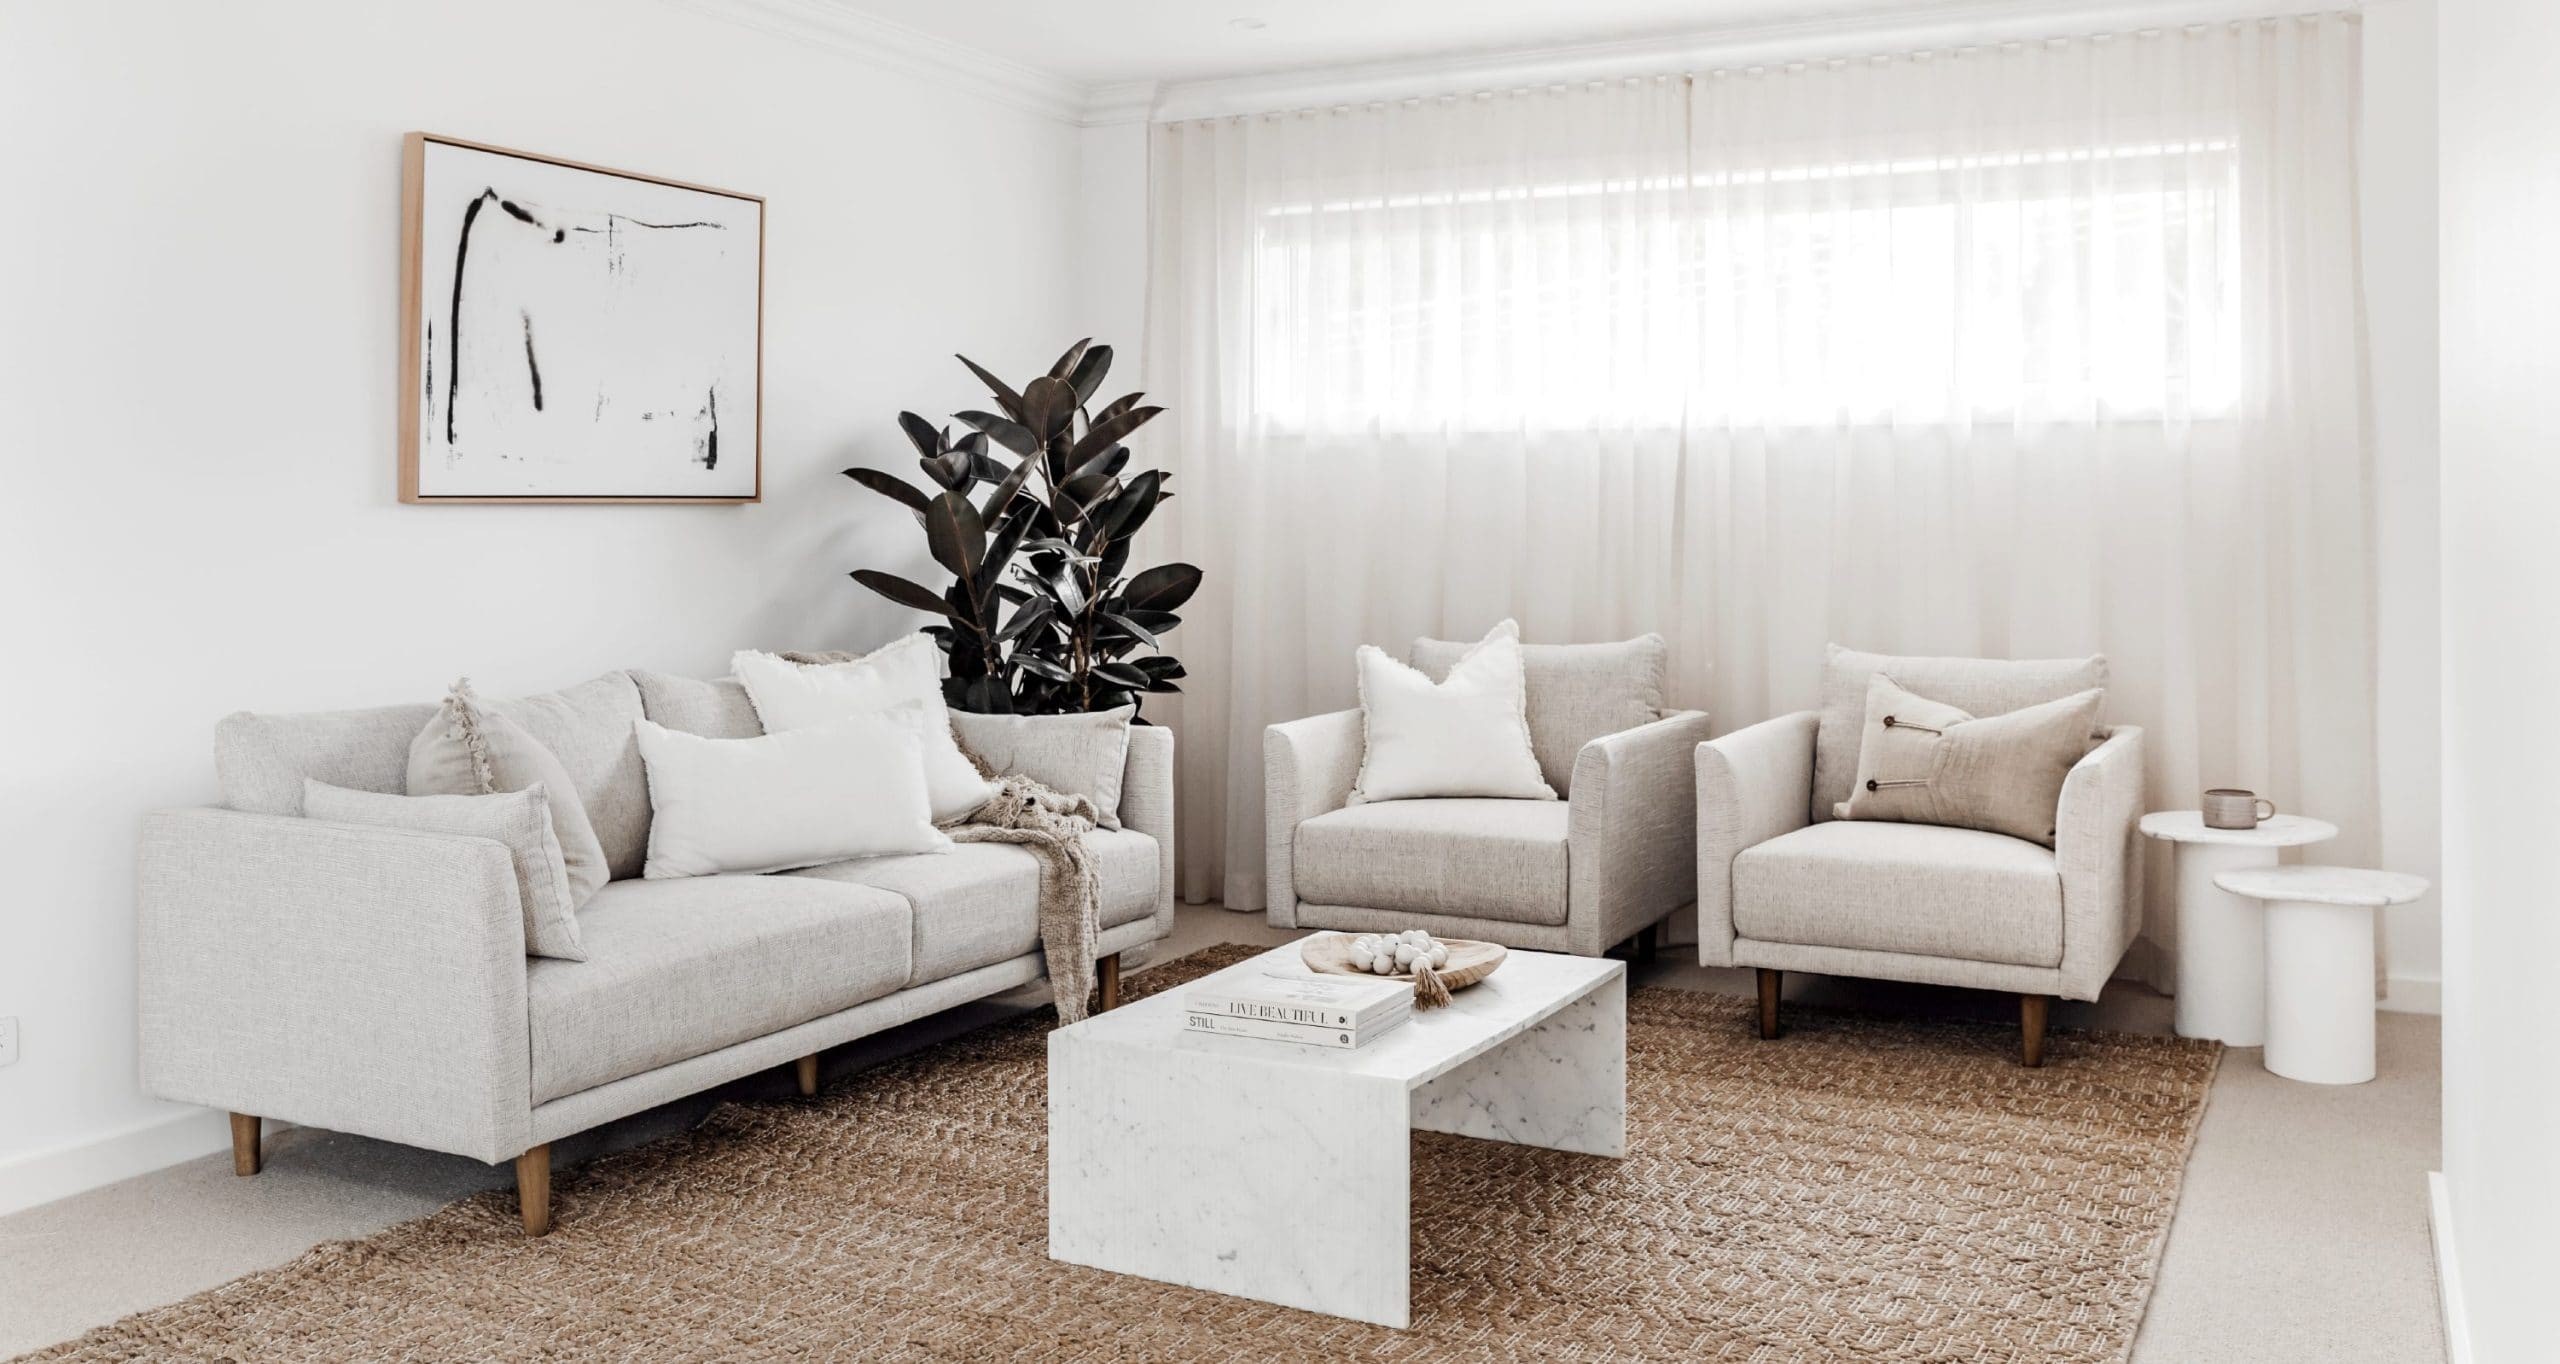 white living room with grey sofa jute rug white sheer curtains miss amara